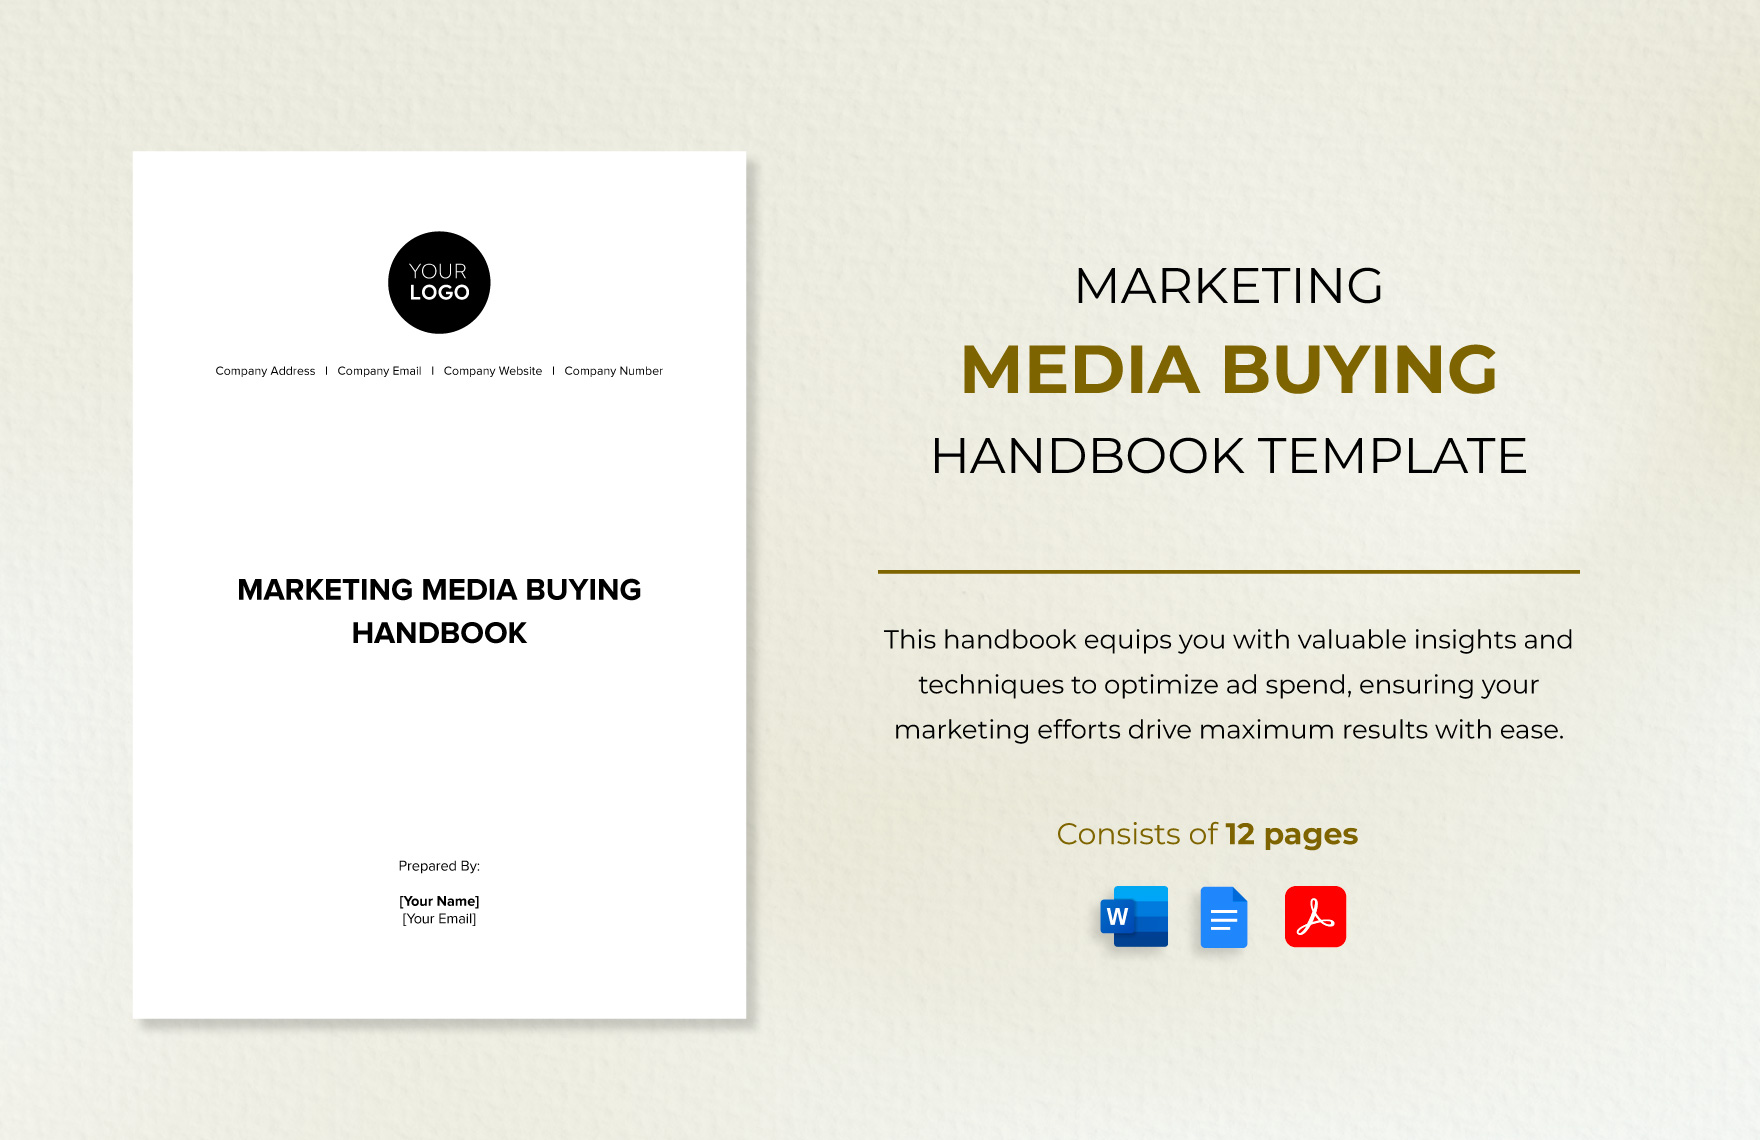 Marketing Media Buying Handbook Template in Word, Google Docs, PDF